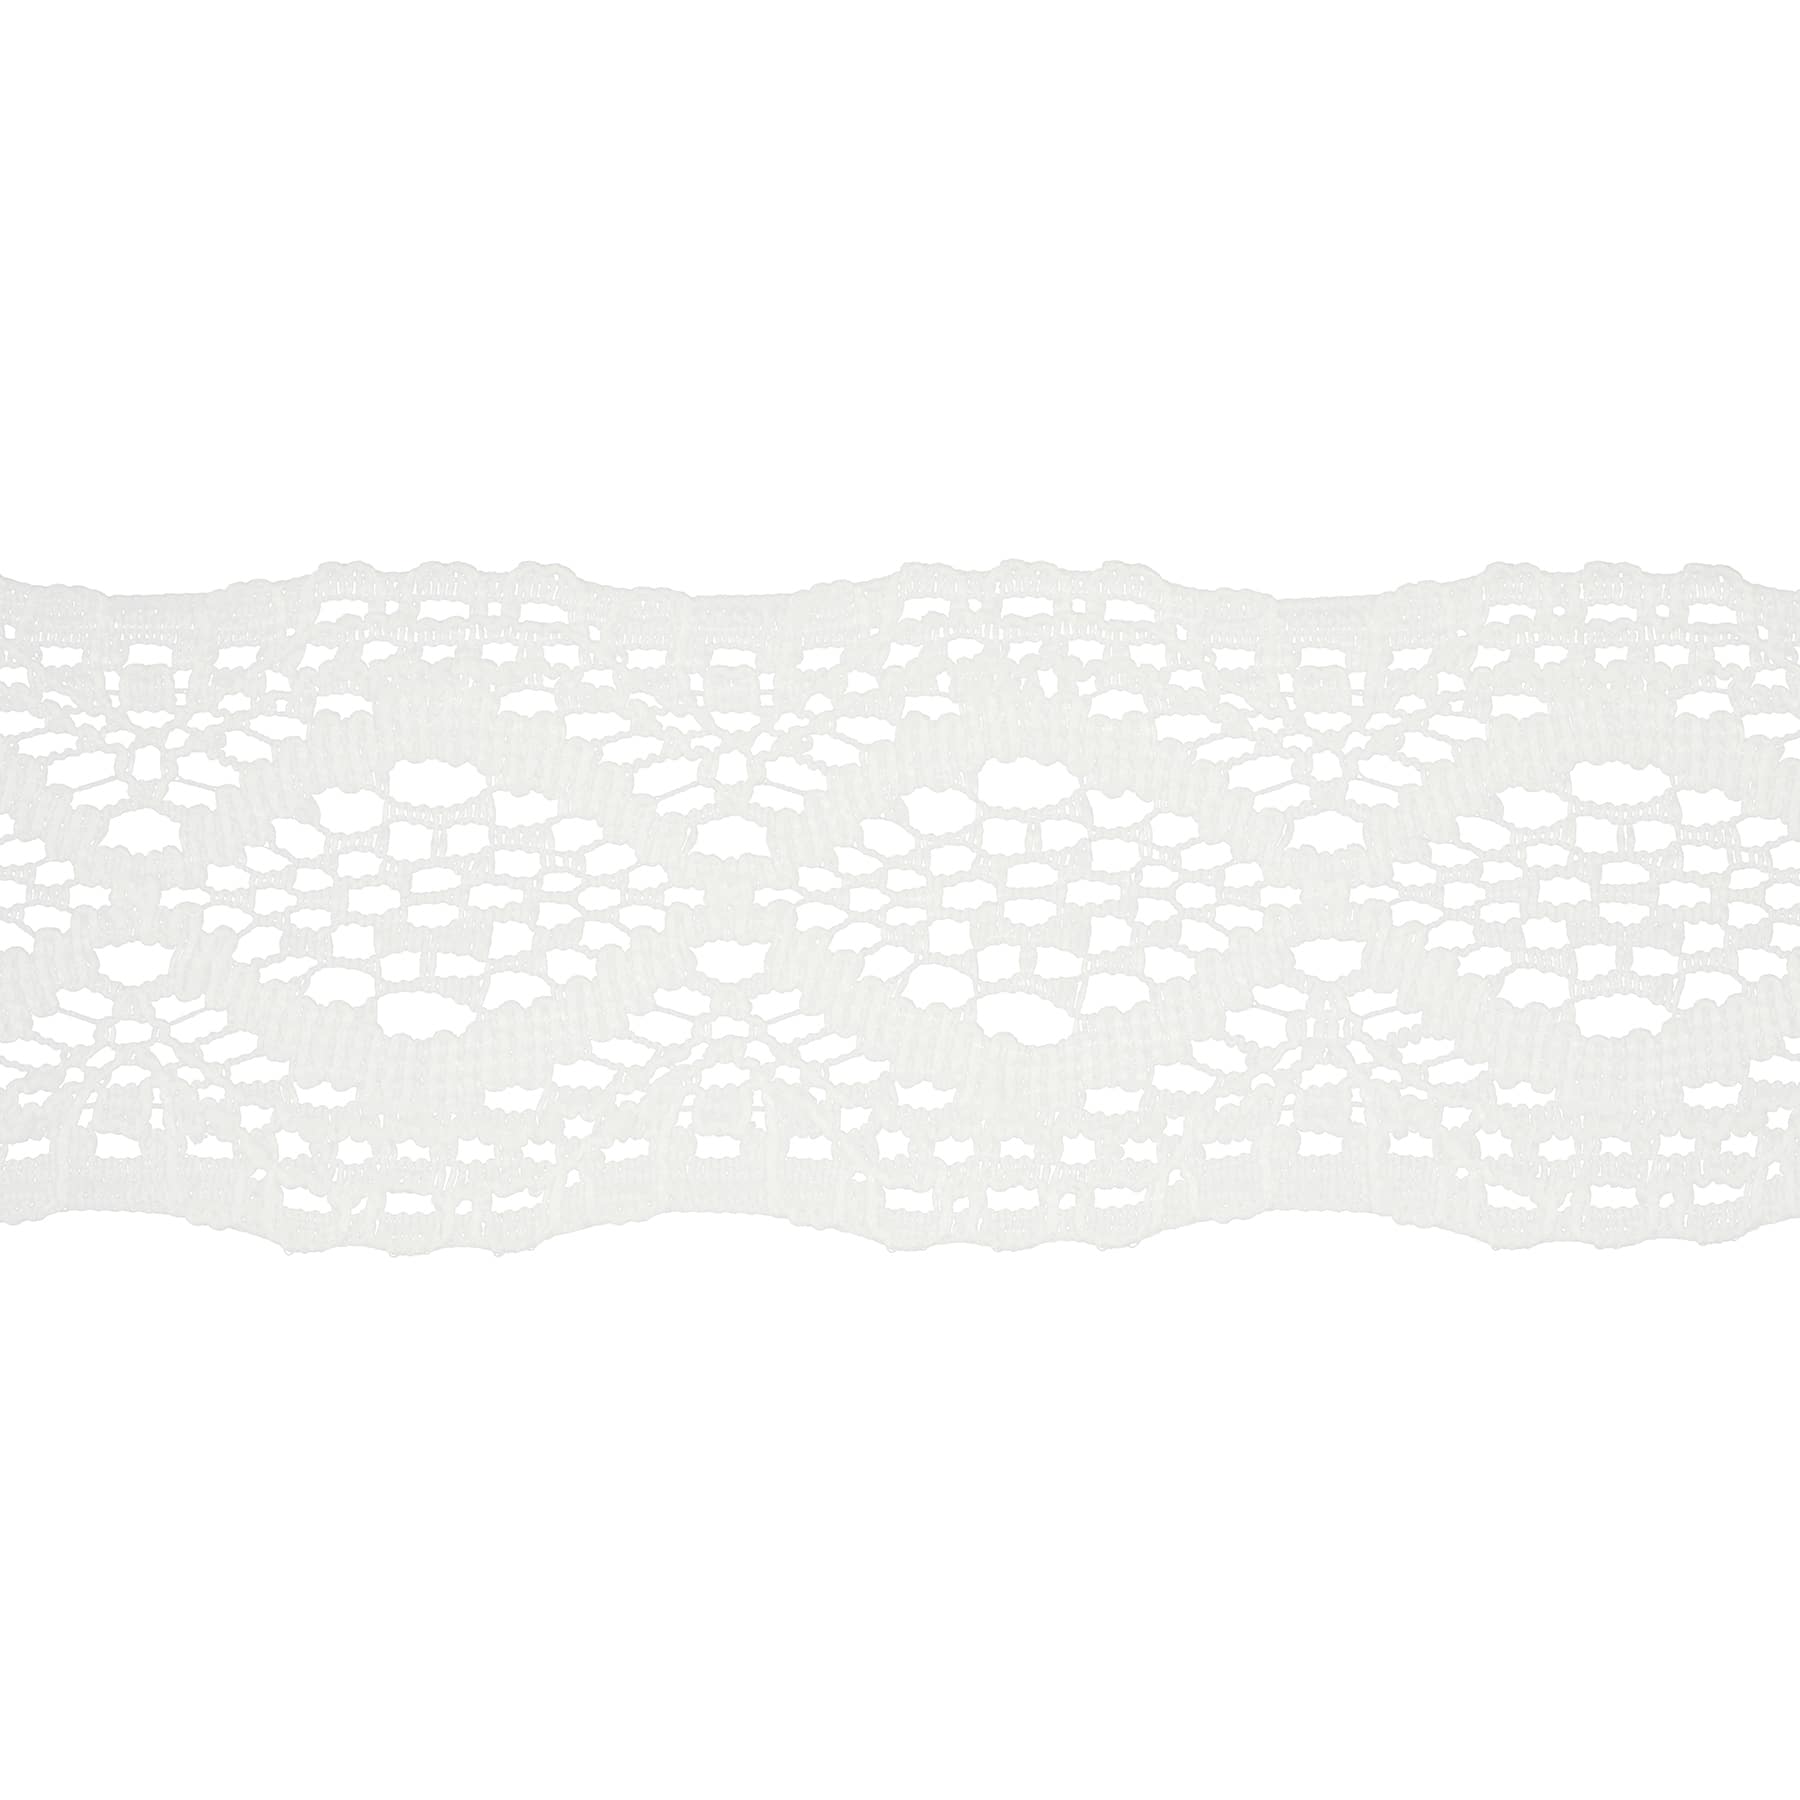 1 x 2yd. Lace Trim Ribbon by Celebrate It in Ivory | Michaels